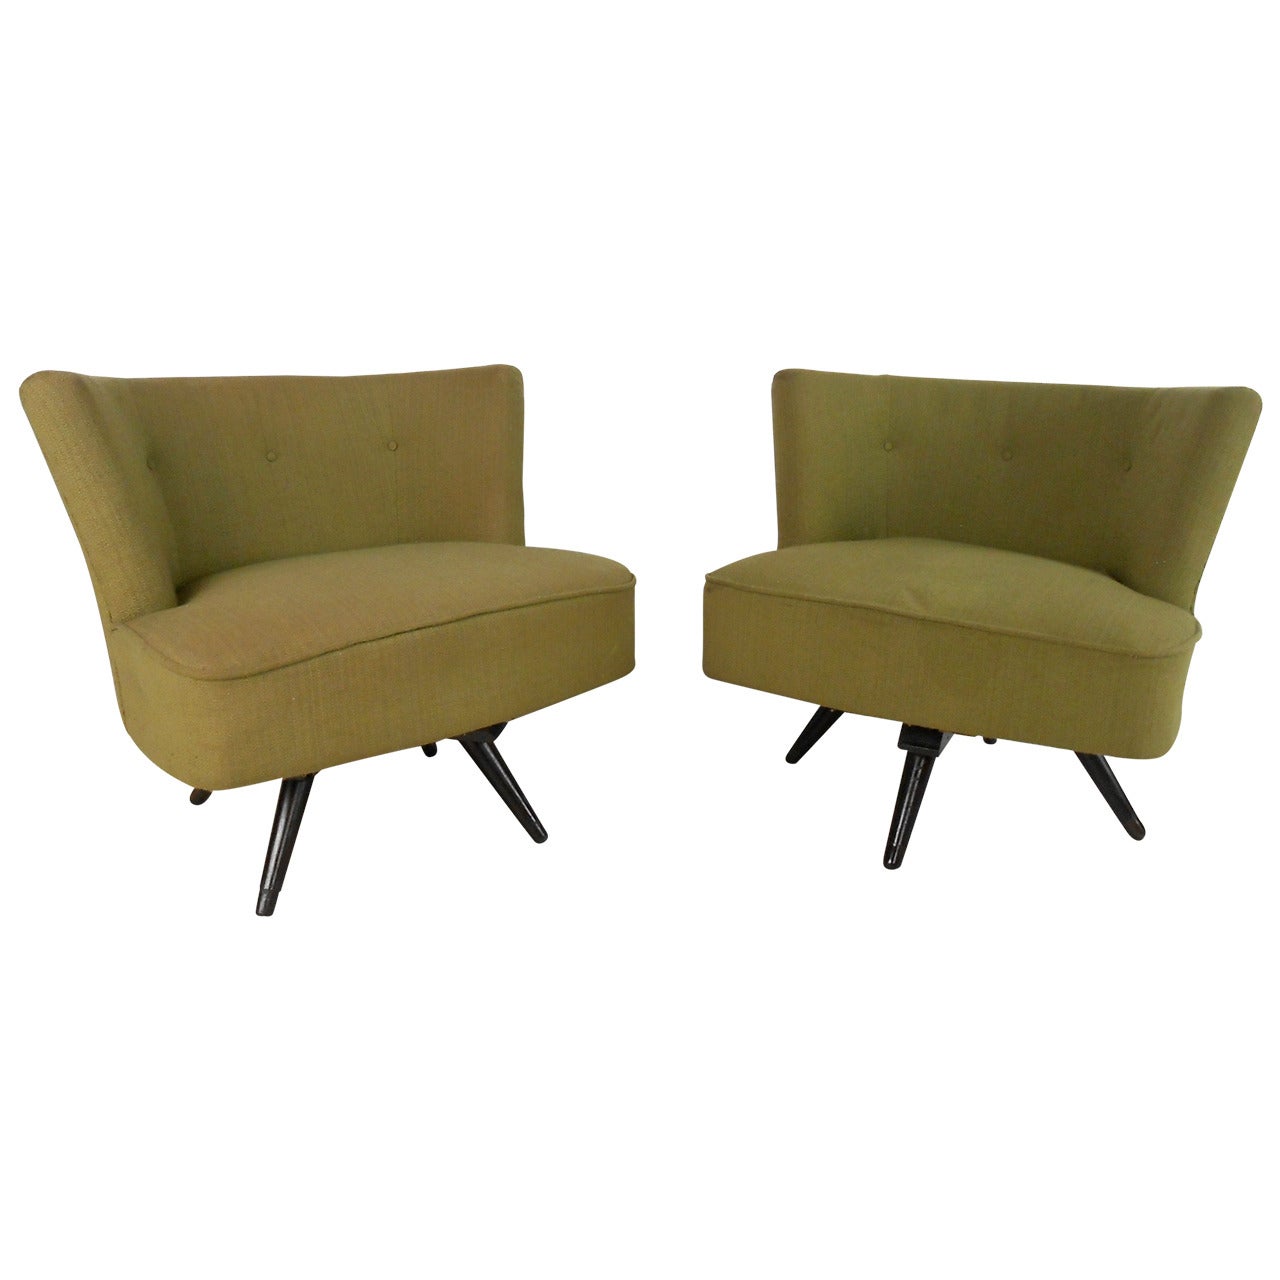 Pair of Mid-Century Modern Swivel Slipper Chairs